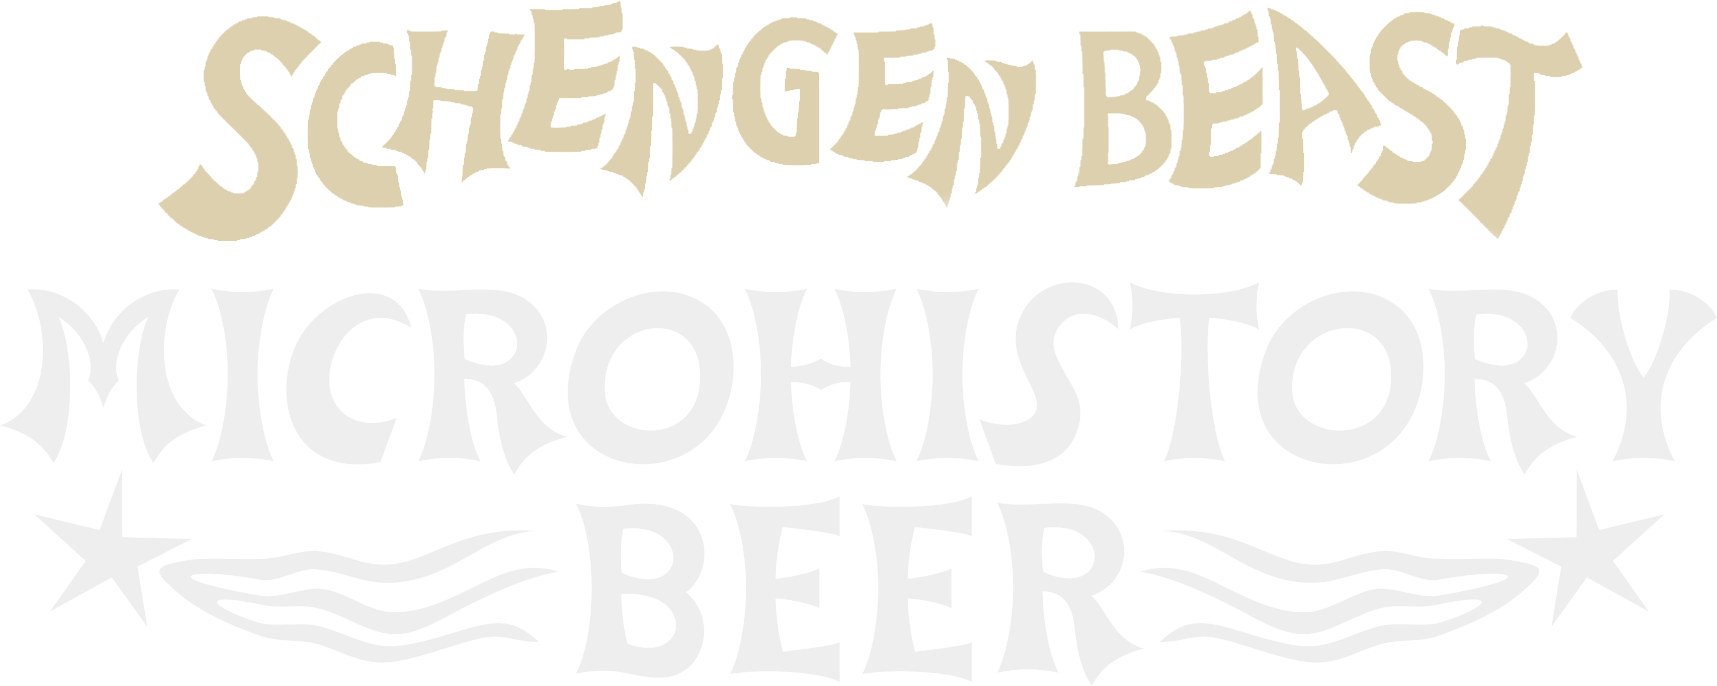 shengen-beast-logo-microhistorybeast.com